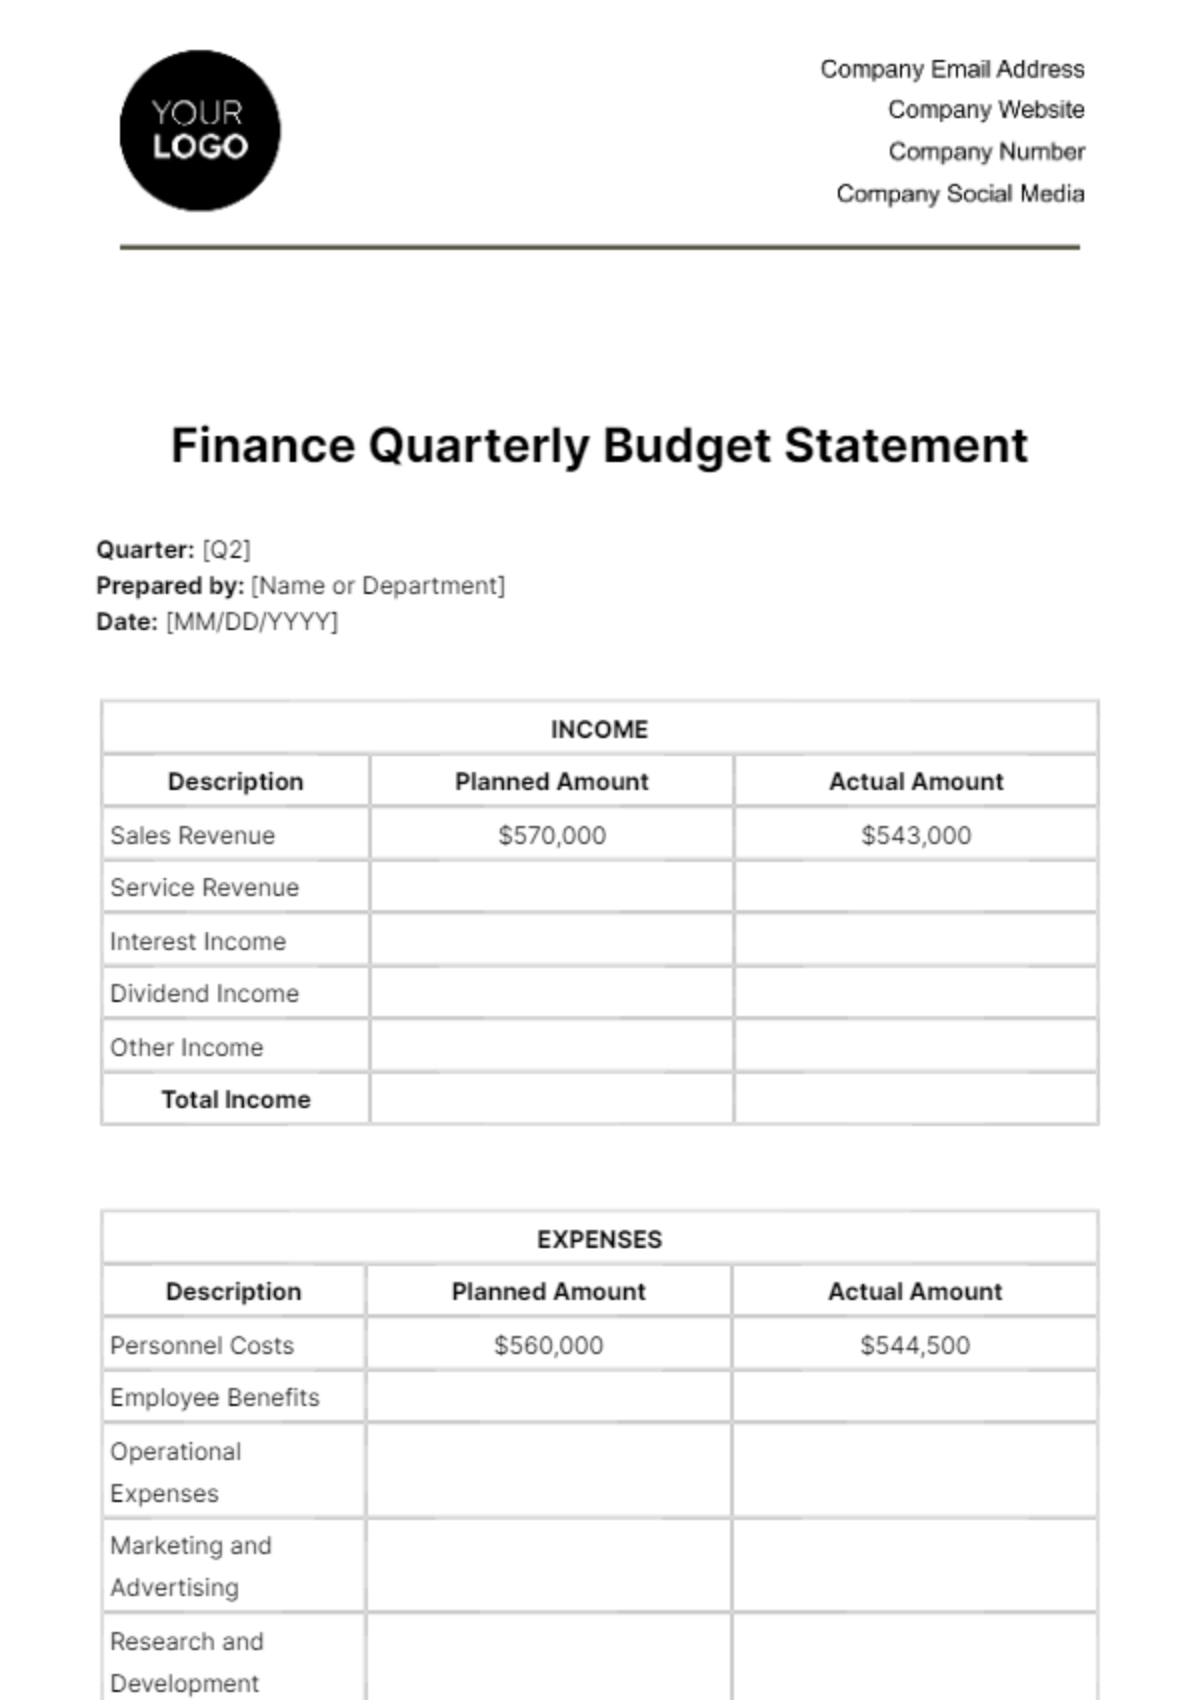 Free Finance Quarterly Budget Statement Template